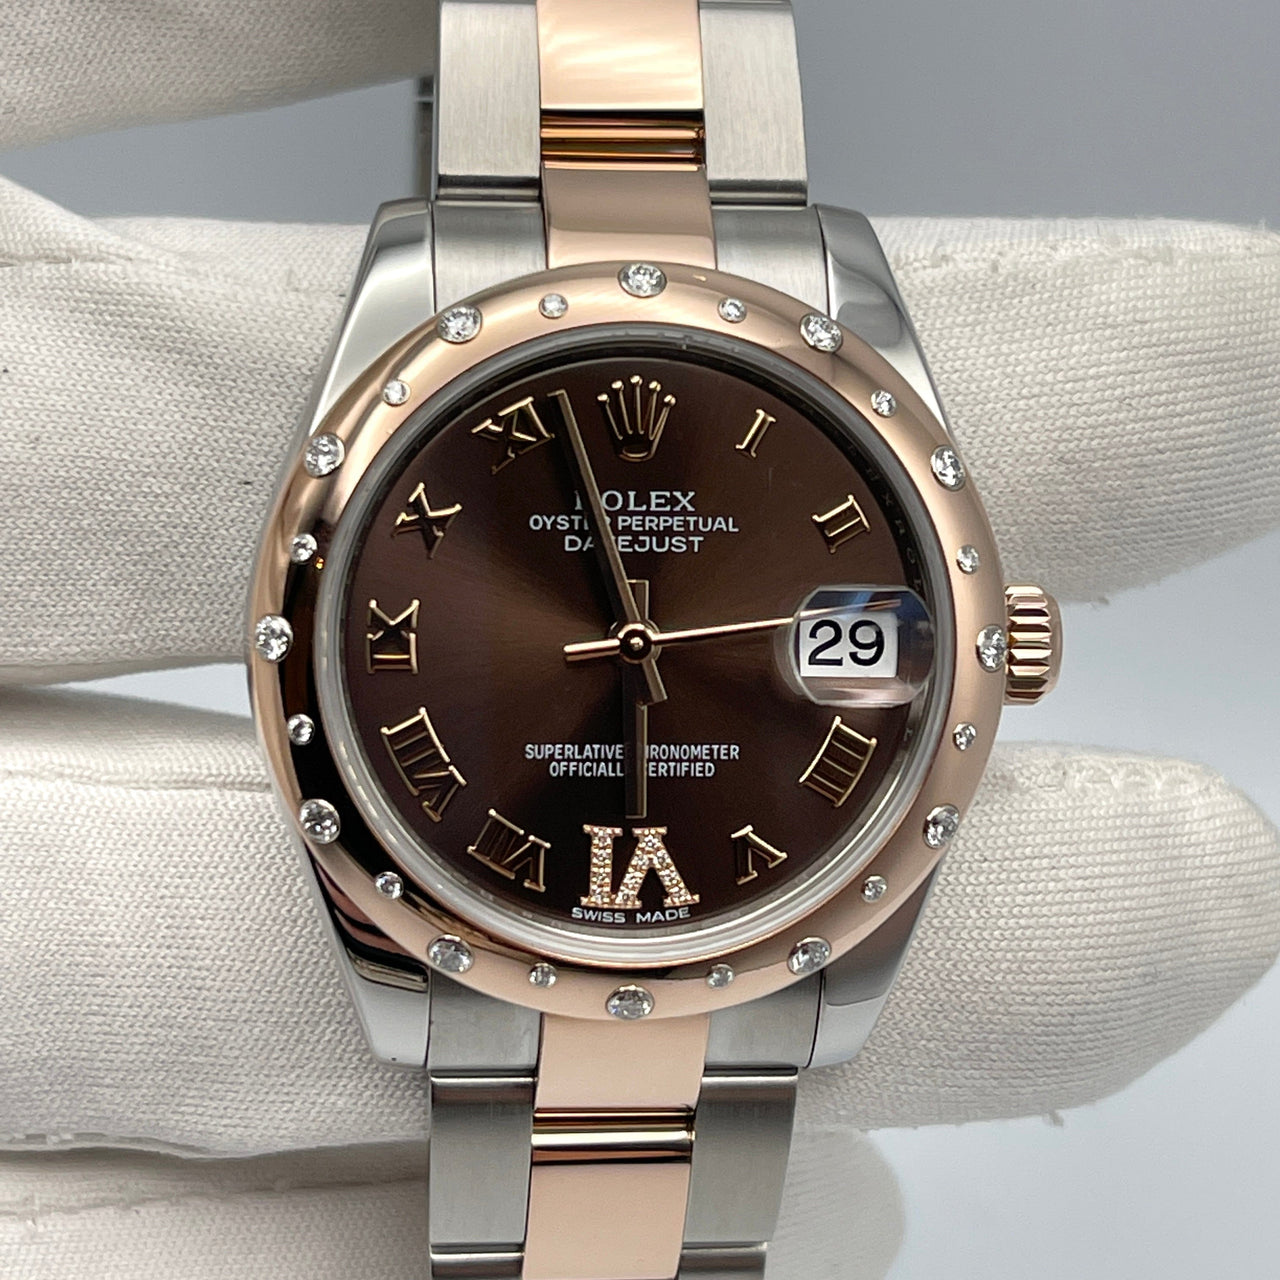 Luxury Watch Rolex Datejust 31 Ladies' Rose Gold & Stainless Steel Chocolate Dial 178341 Wrist Aficionado